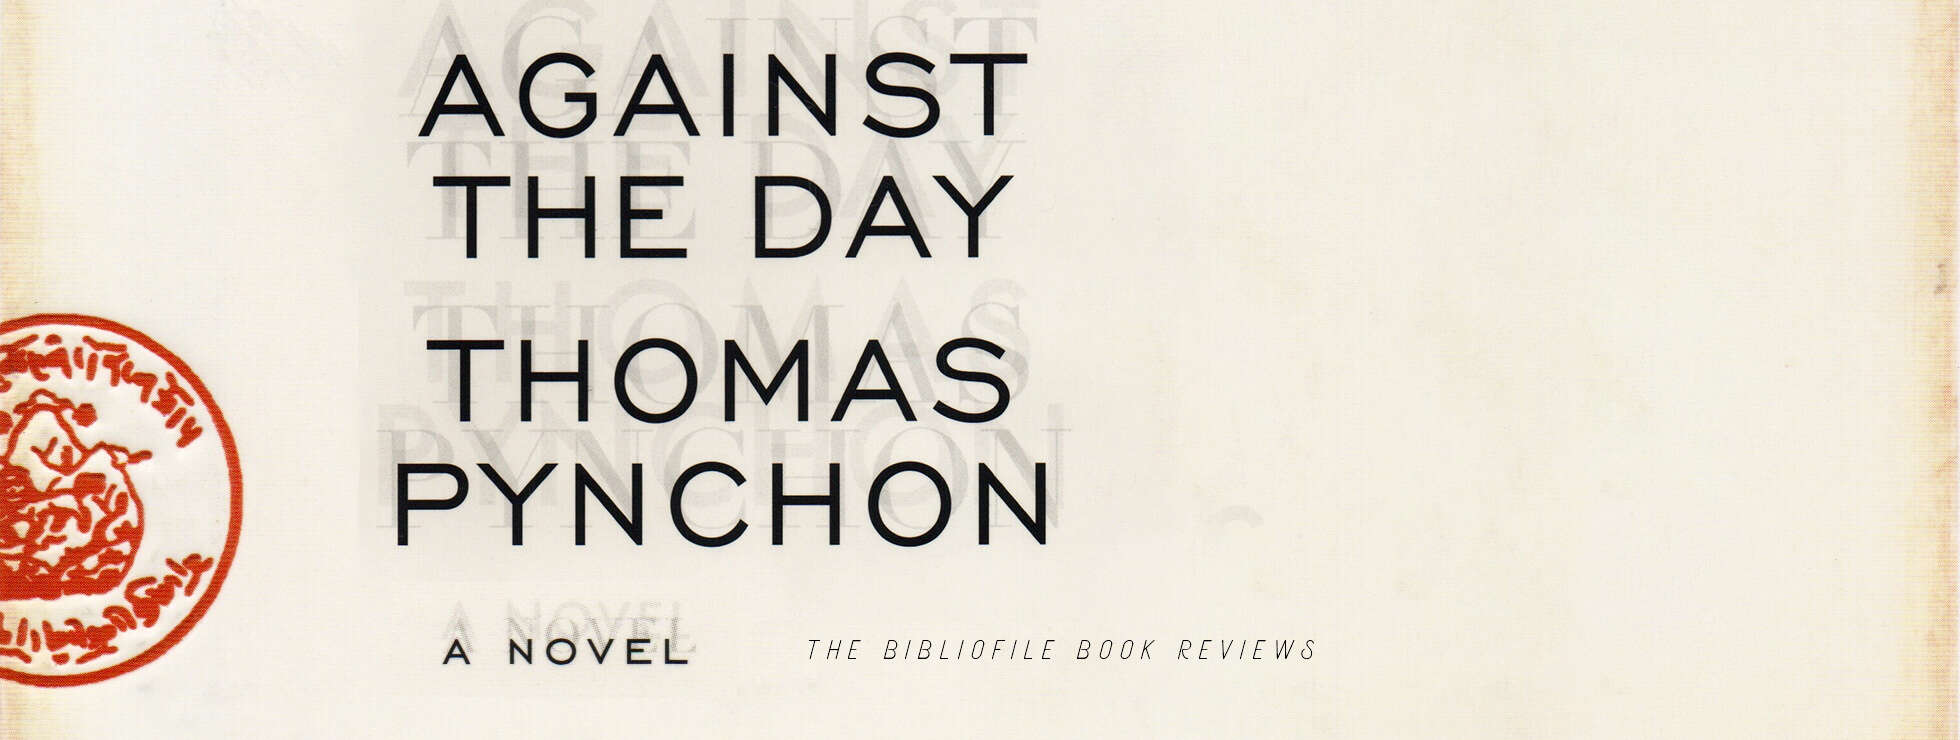 反对Thomas Pynchon的一天